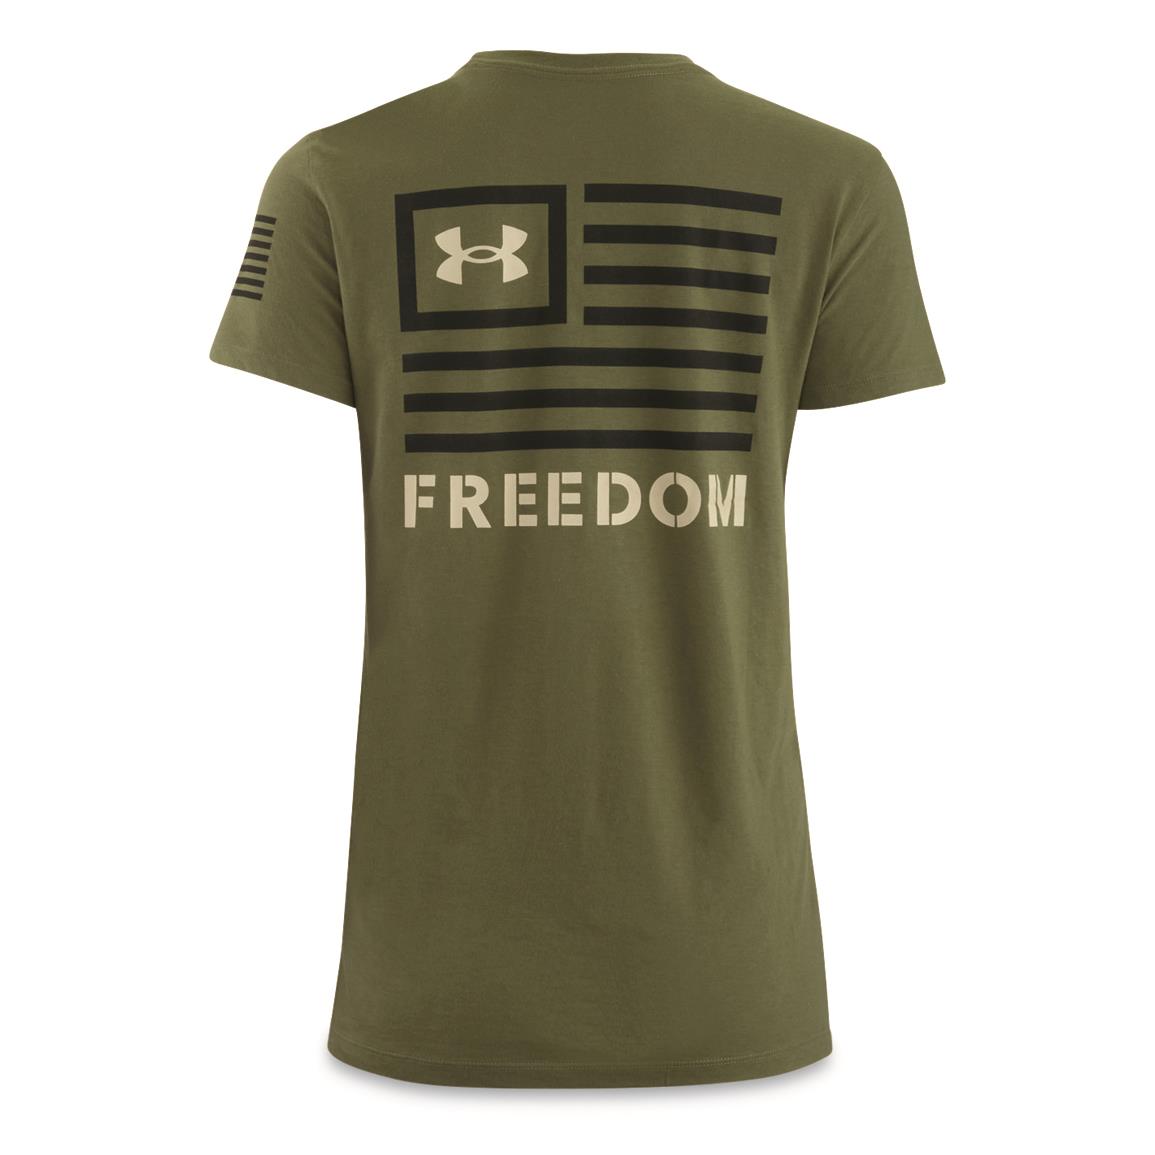 Under Armor Women's Freedom Banner T Shirt, Marine OD Green/Black